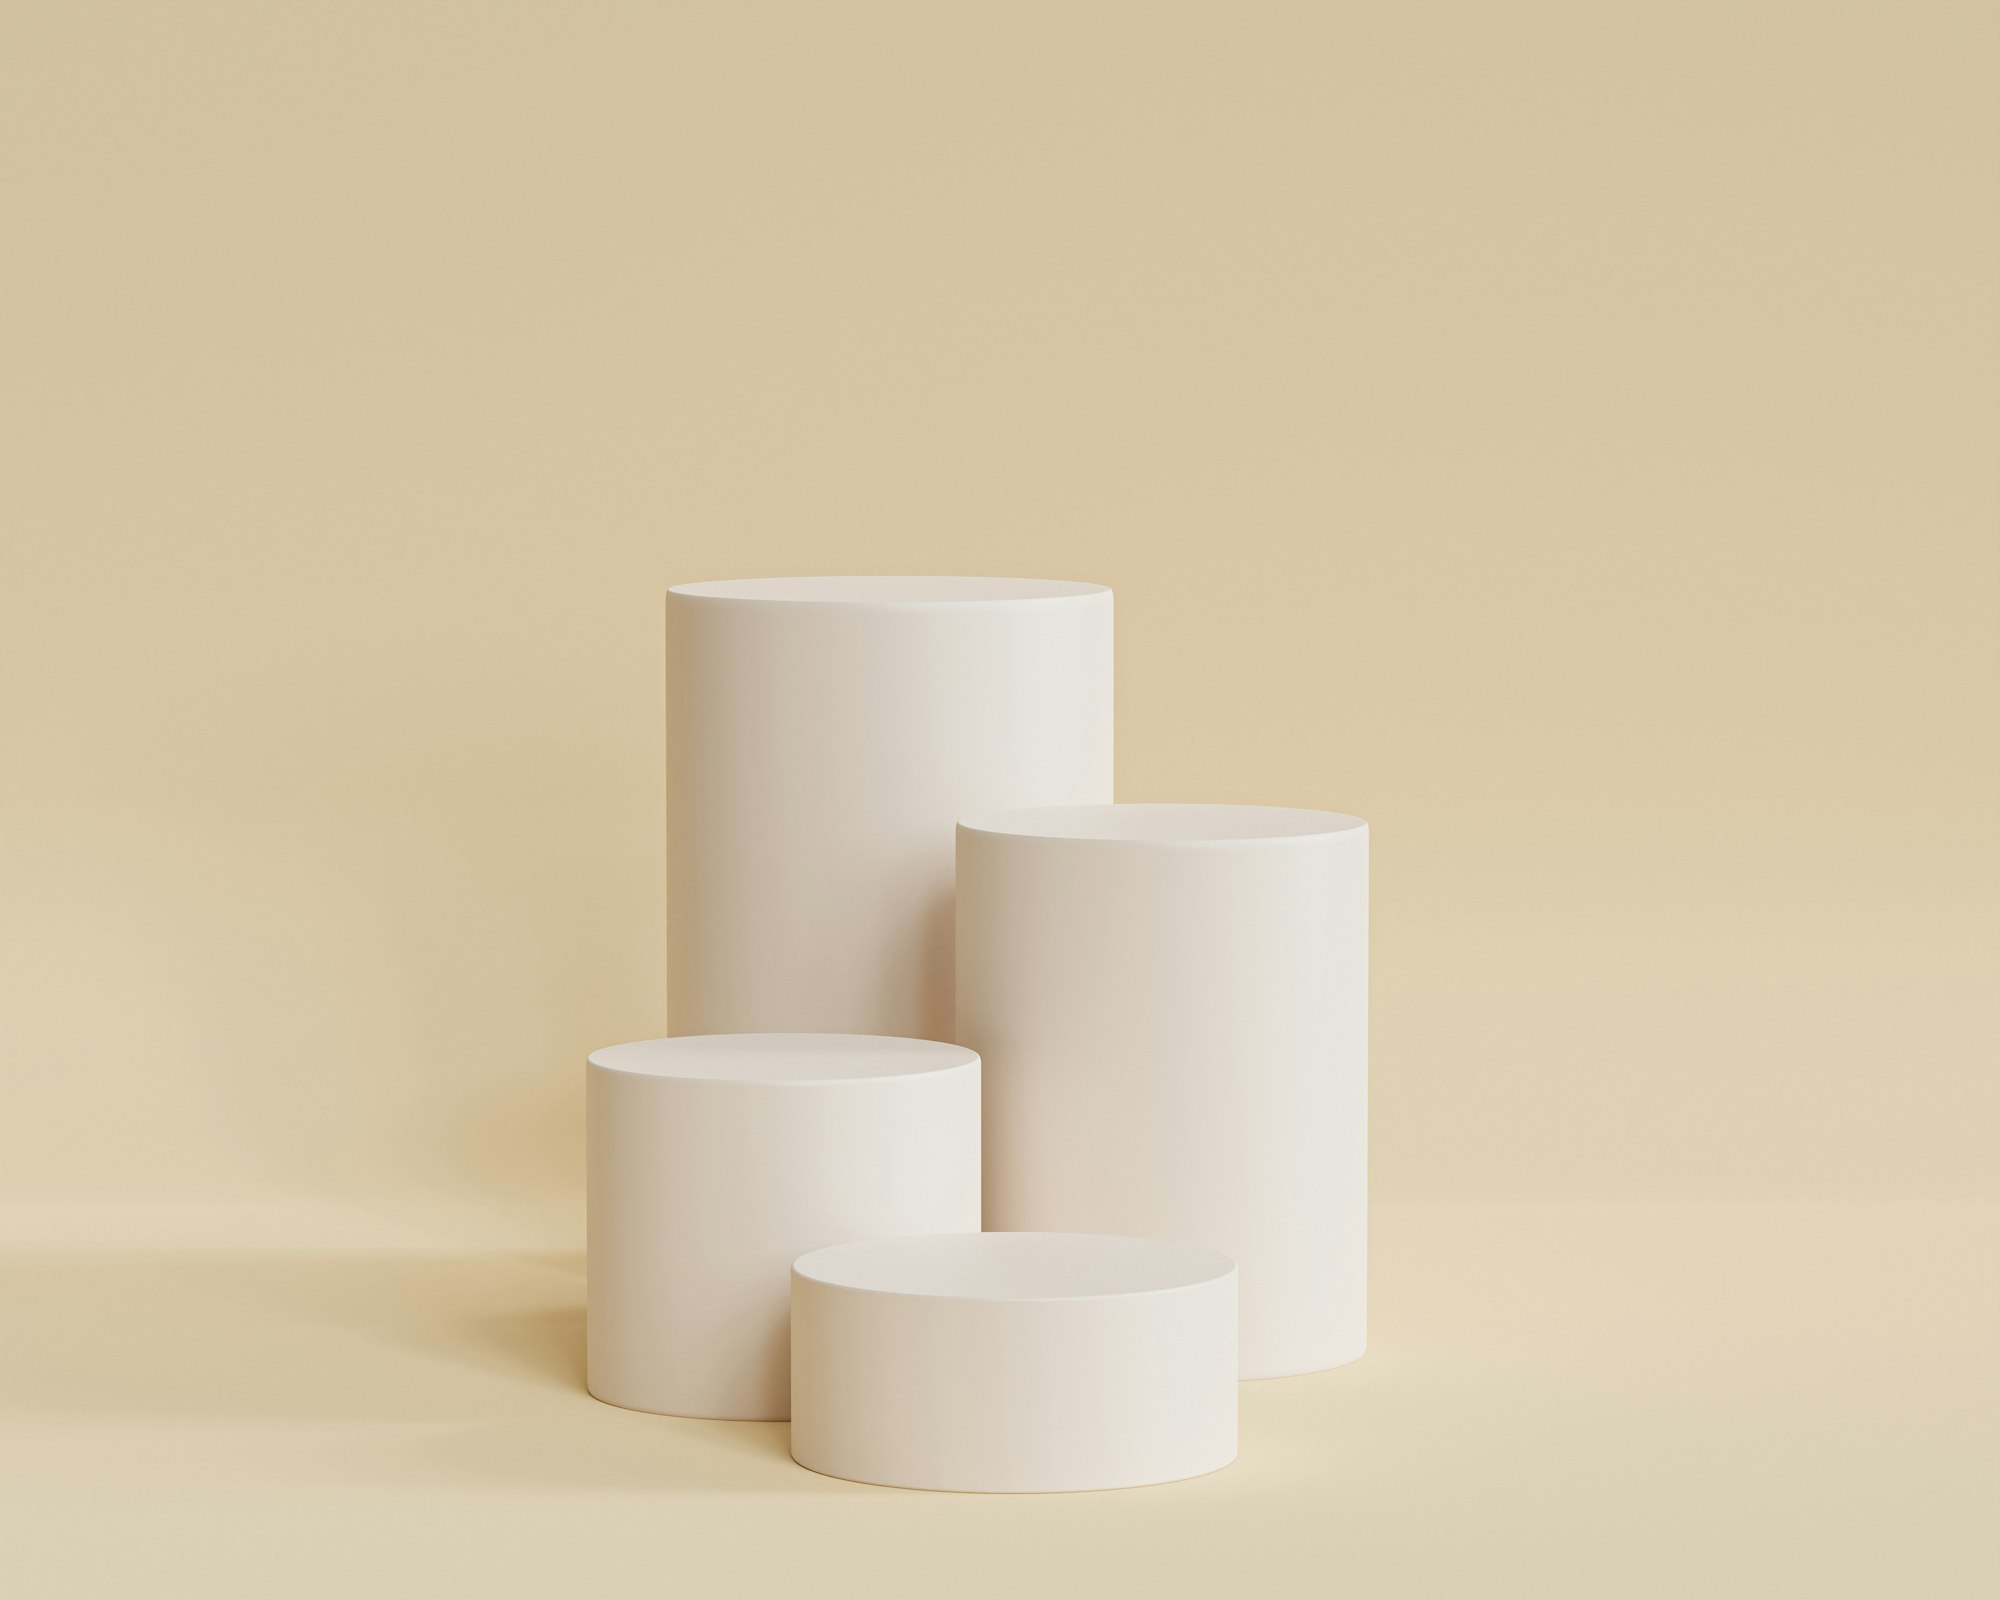 Cylinder shaped podiums or pedestals for products or advertising on beige background, minimal 3d illustration render